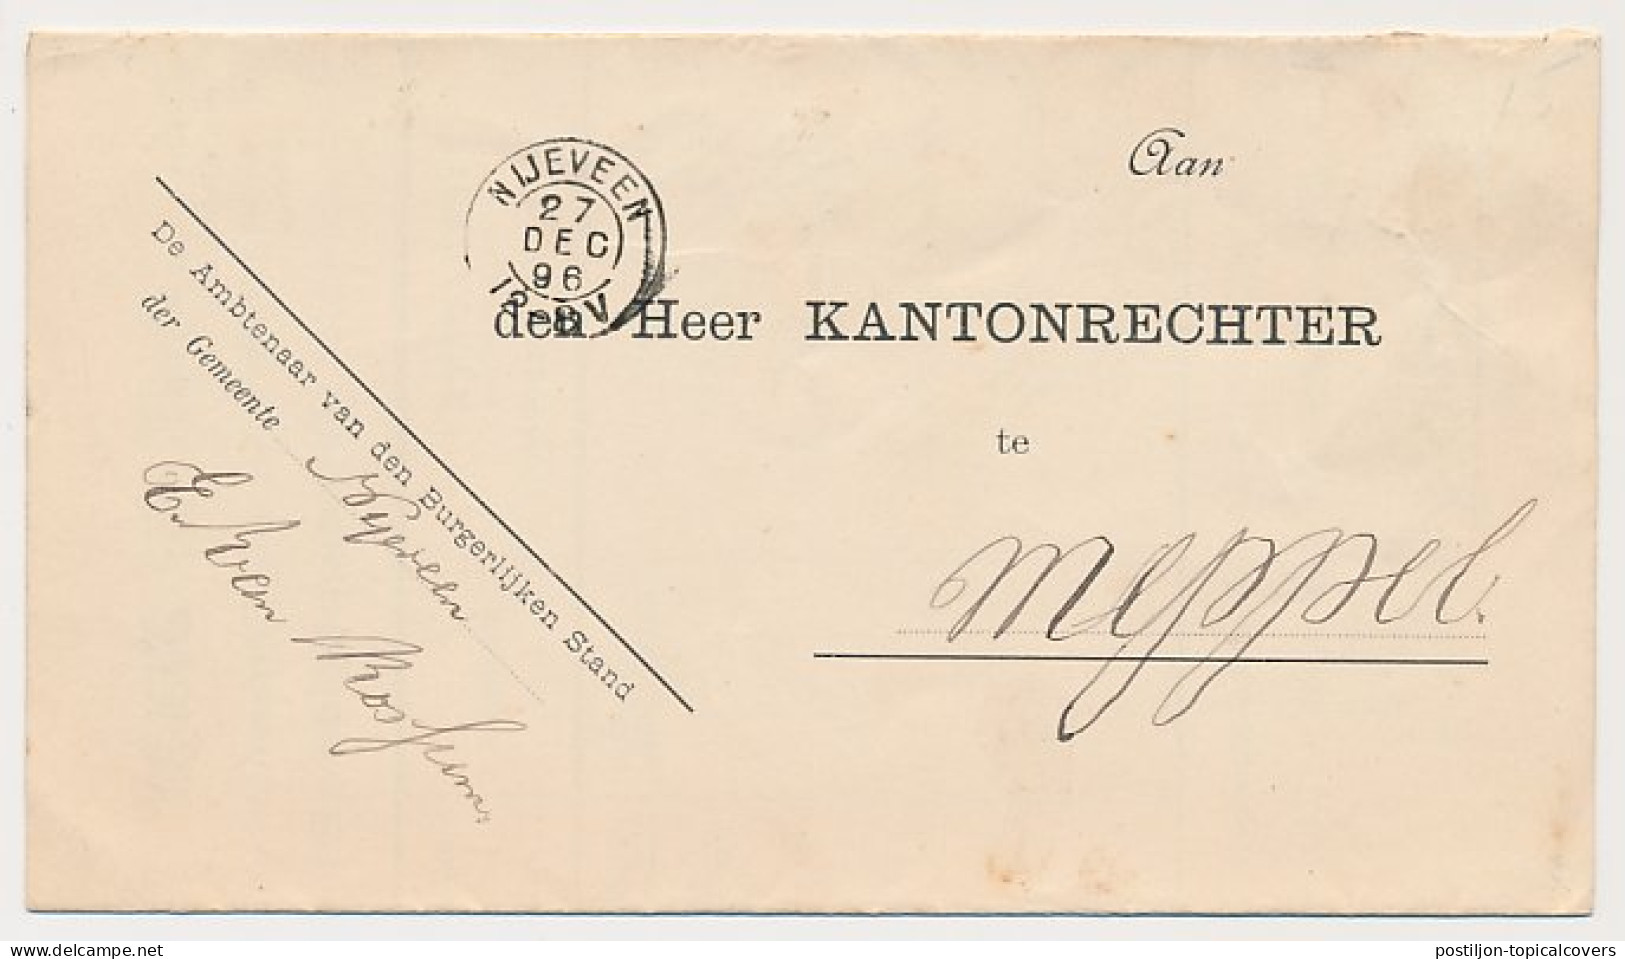 Kleinrondstempel Nijeveen 1896 - Non Classificati